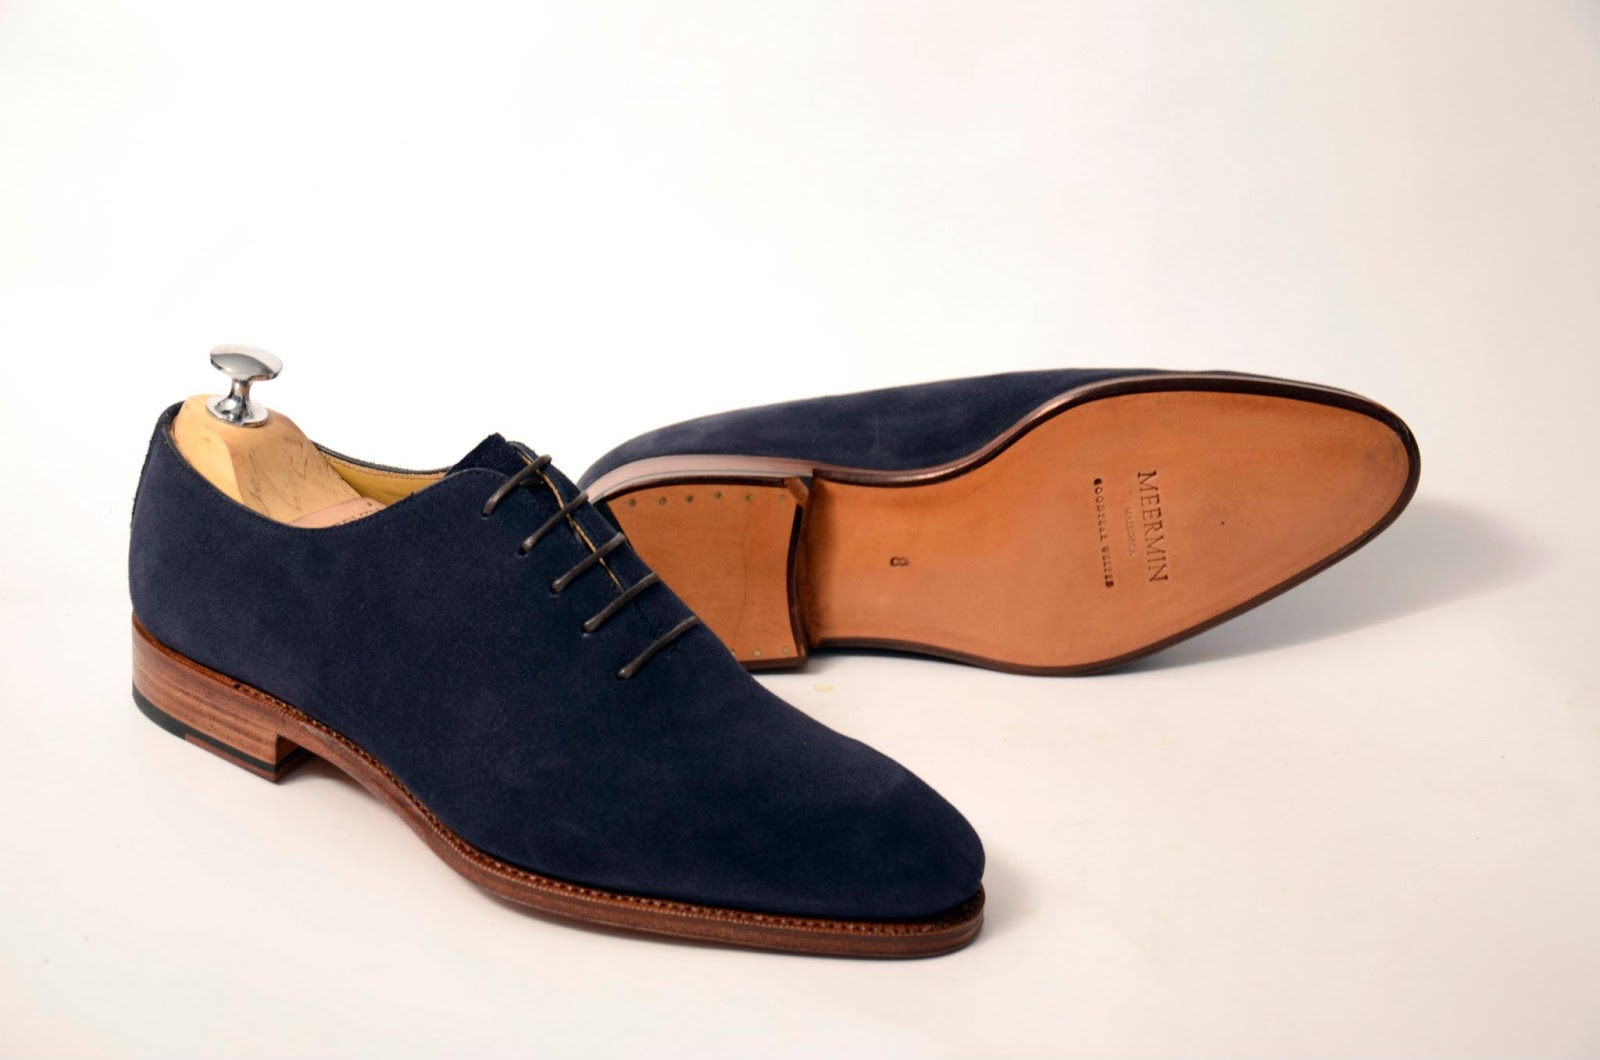 The Shoe AristoCat: Meermin suede offerings for Summer 2013